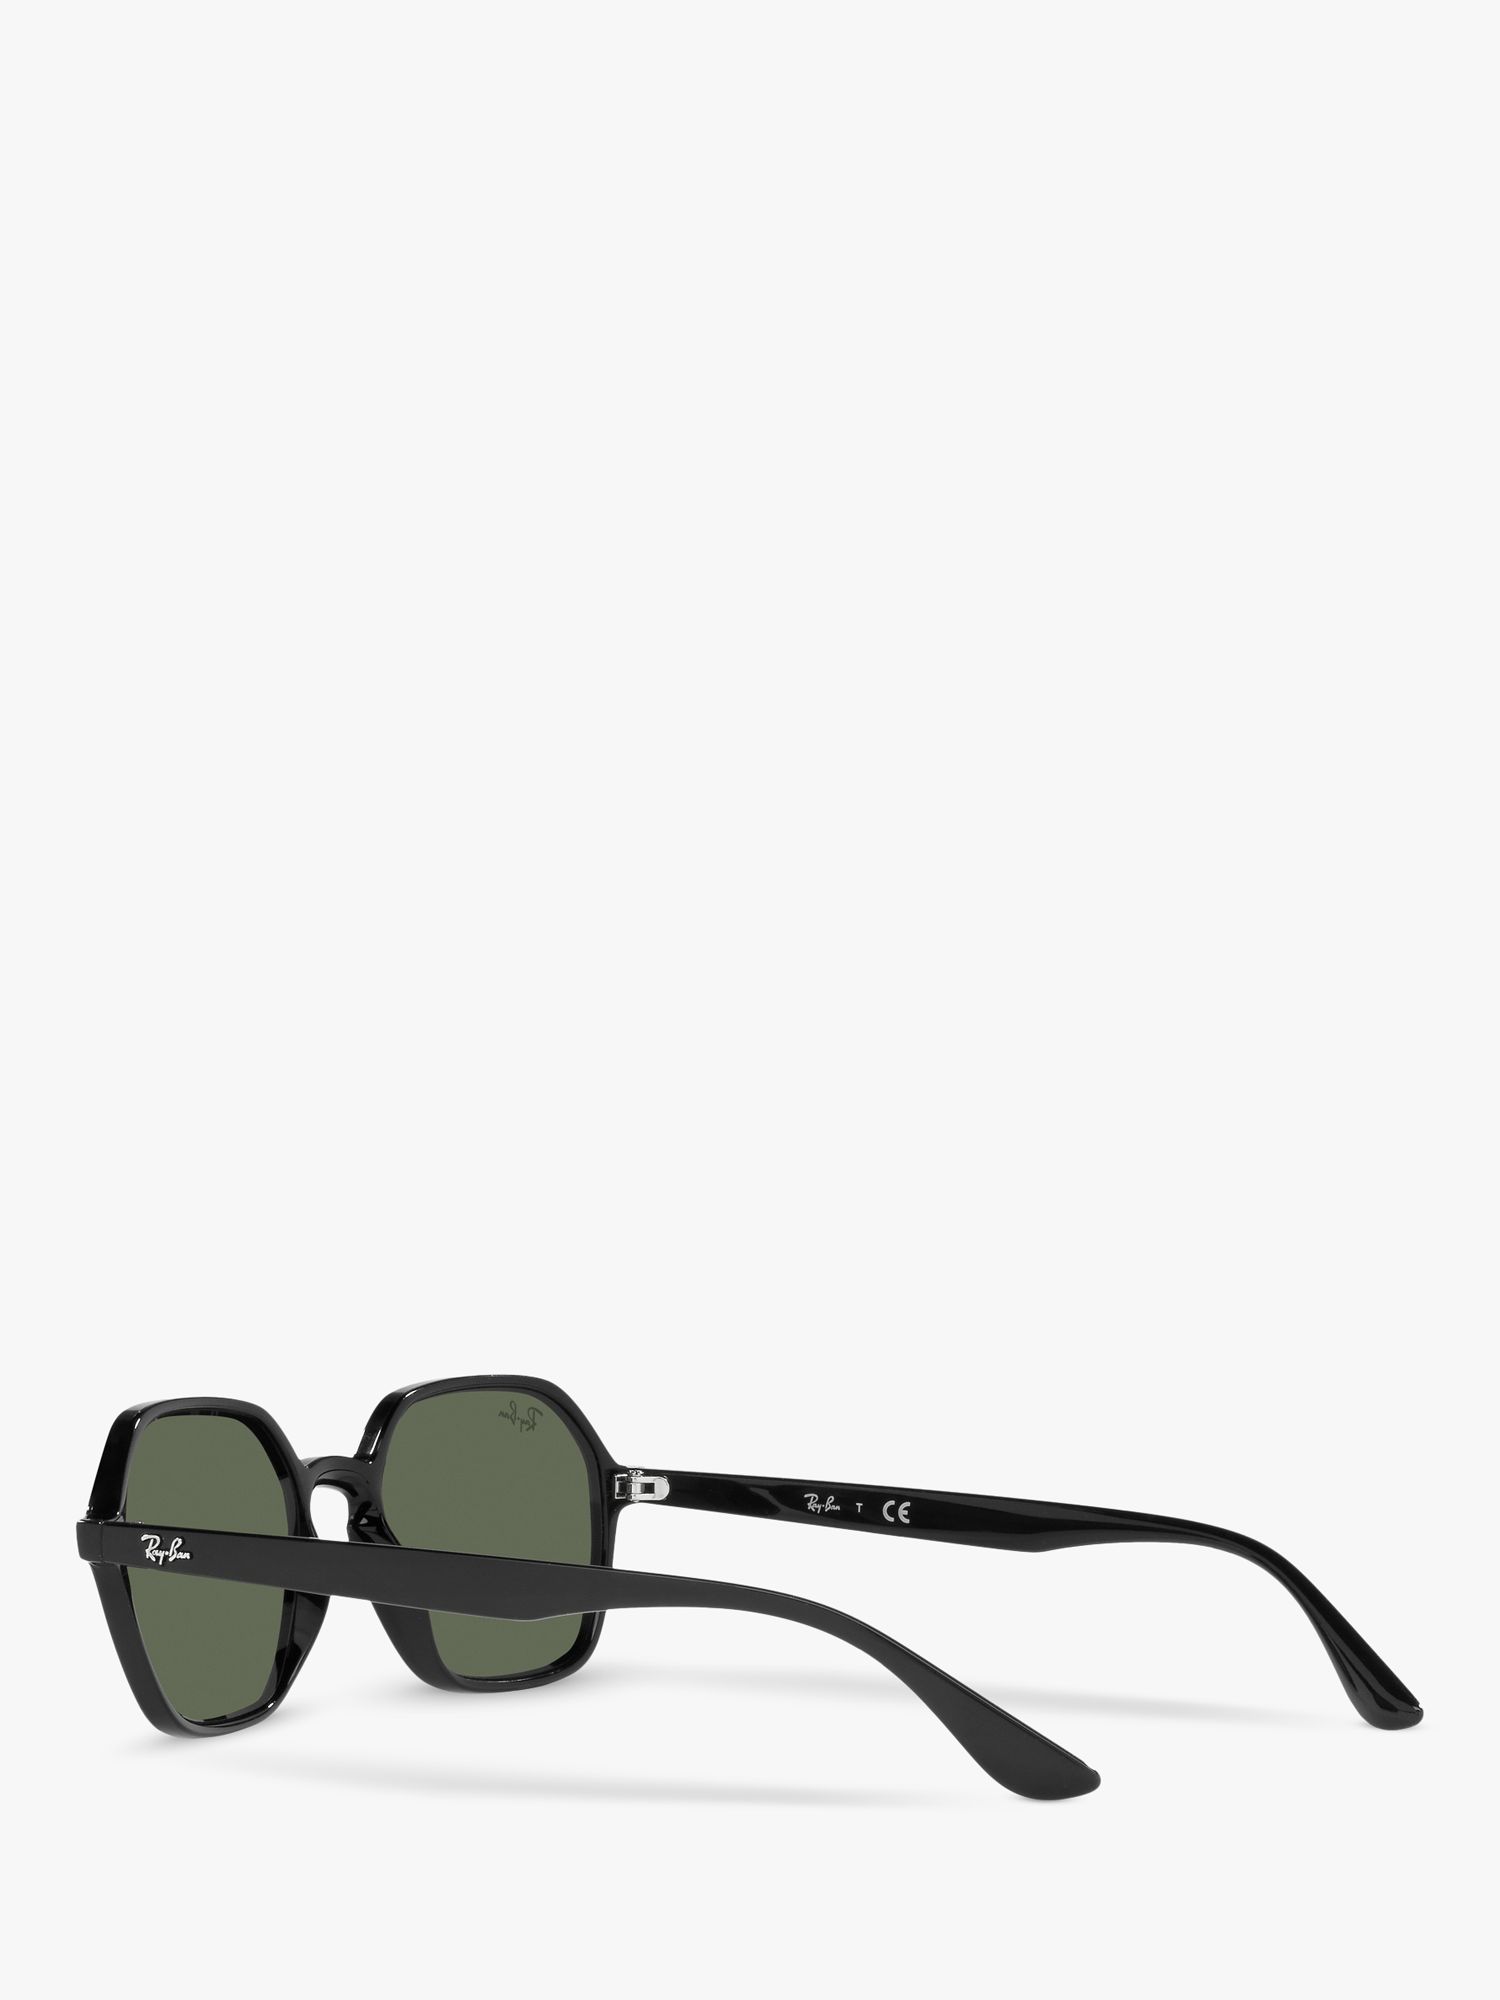 Buy Ray-Ban RB4361 Unisex Irregular Sunglasses, Shiny Black/Green Online at johnlewis.com